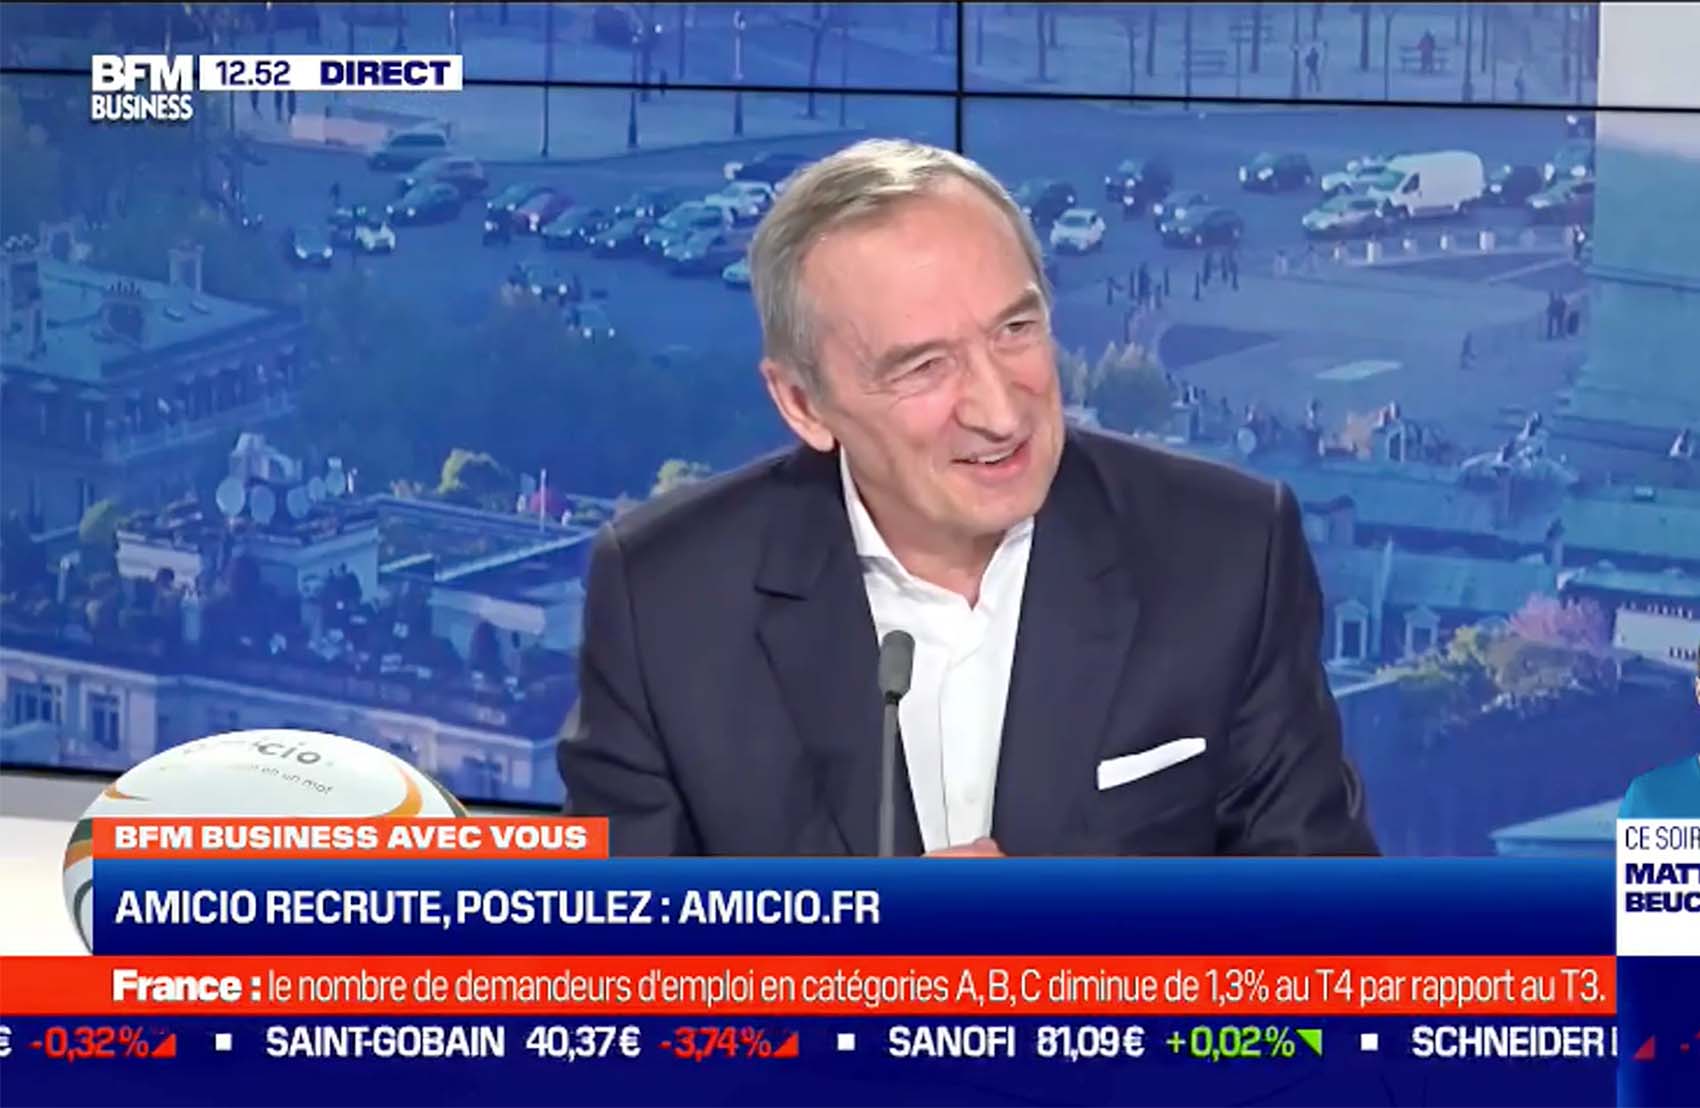 Benoît Bourla à BFM TV présente Amicio